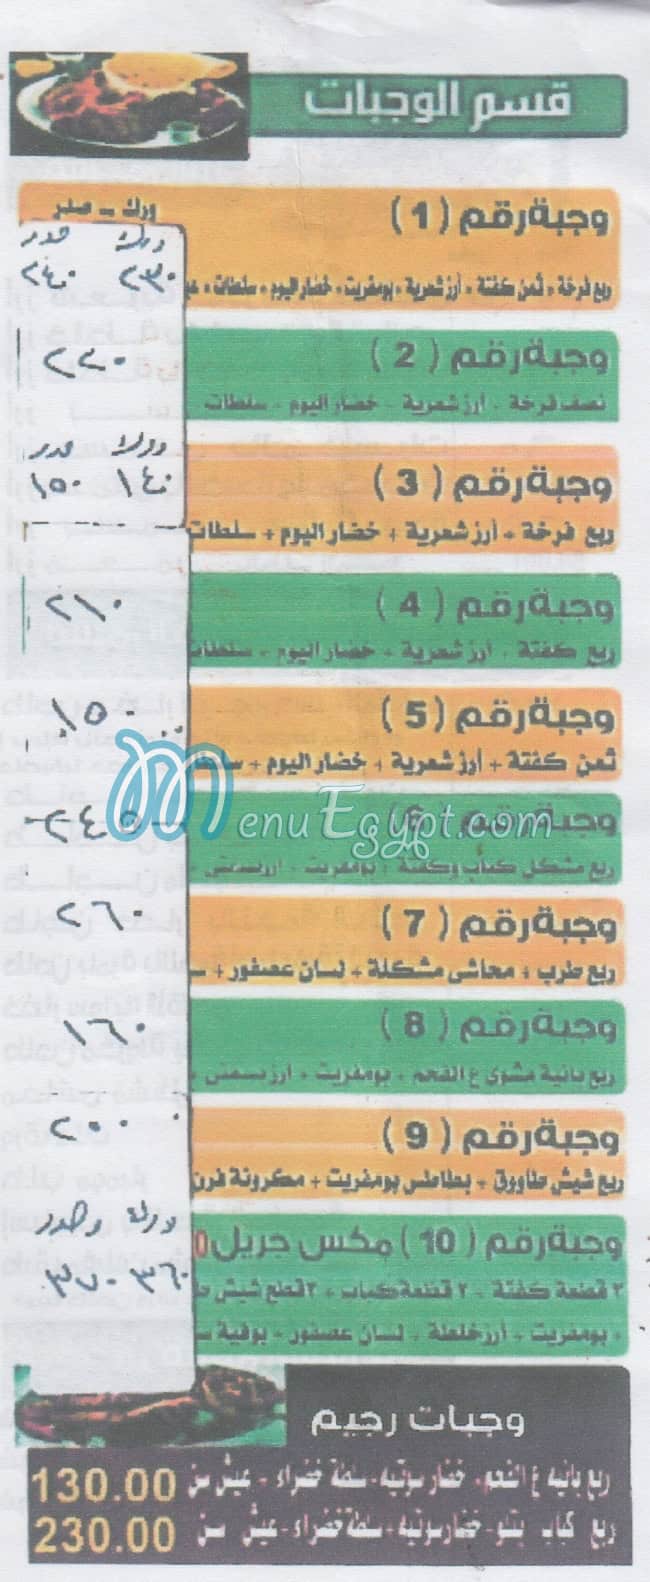 Mashweyat Al Aqsa El Shareef menu Egypt